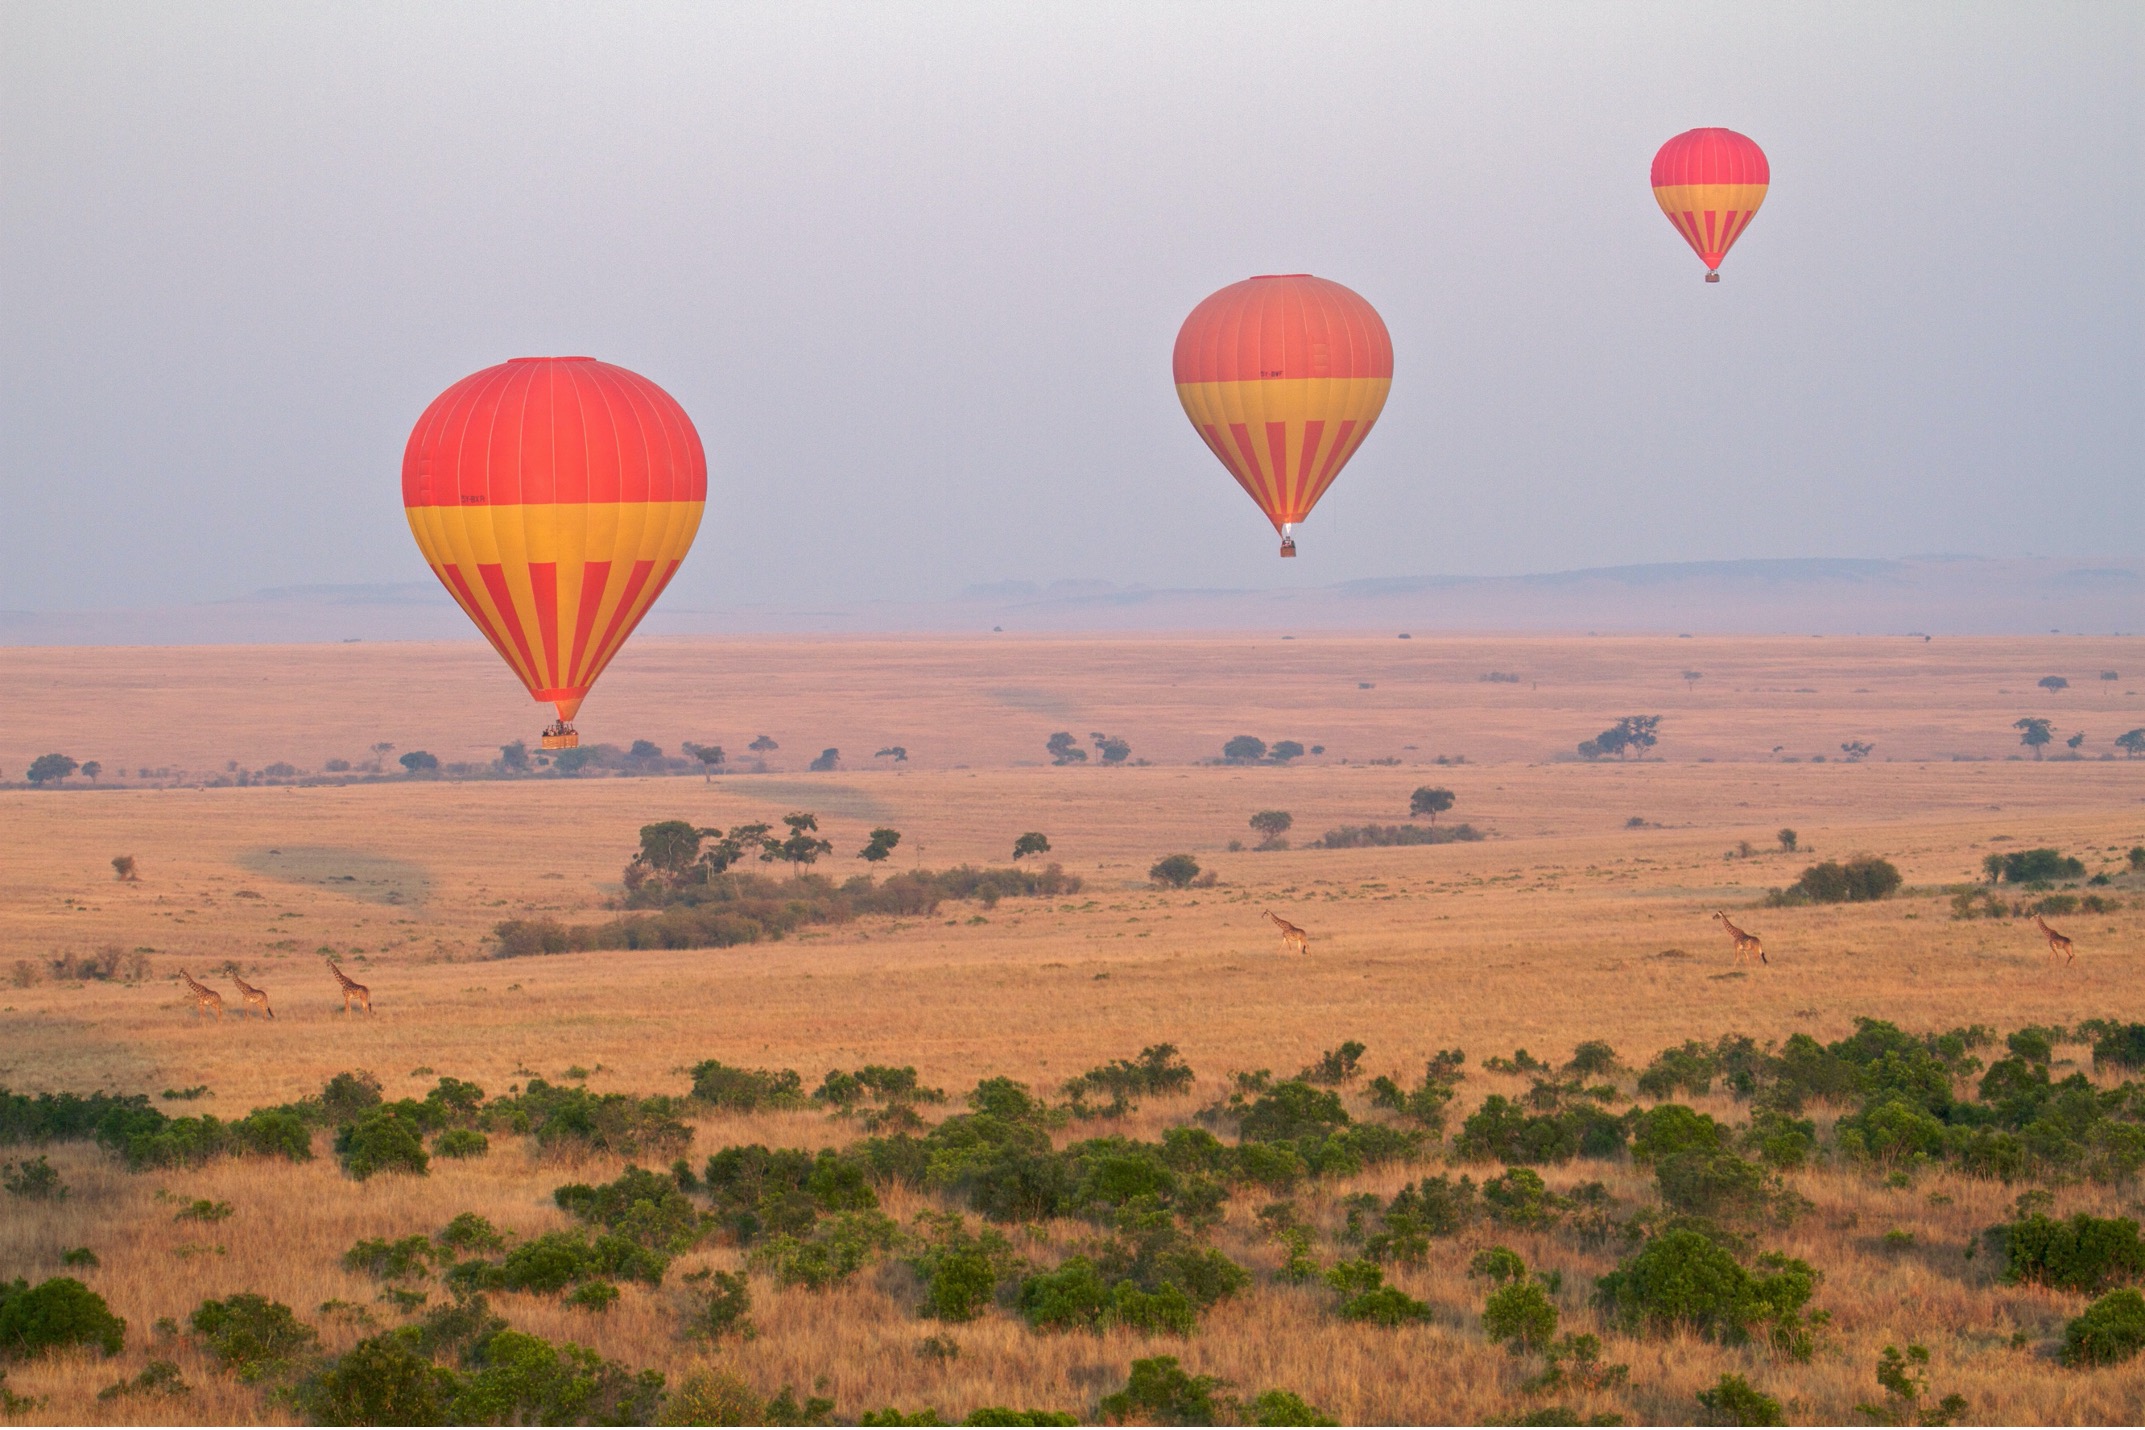 three hot air balloons soar over the vast plains of Kenya